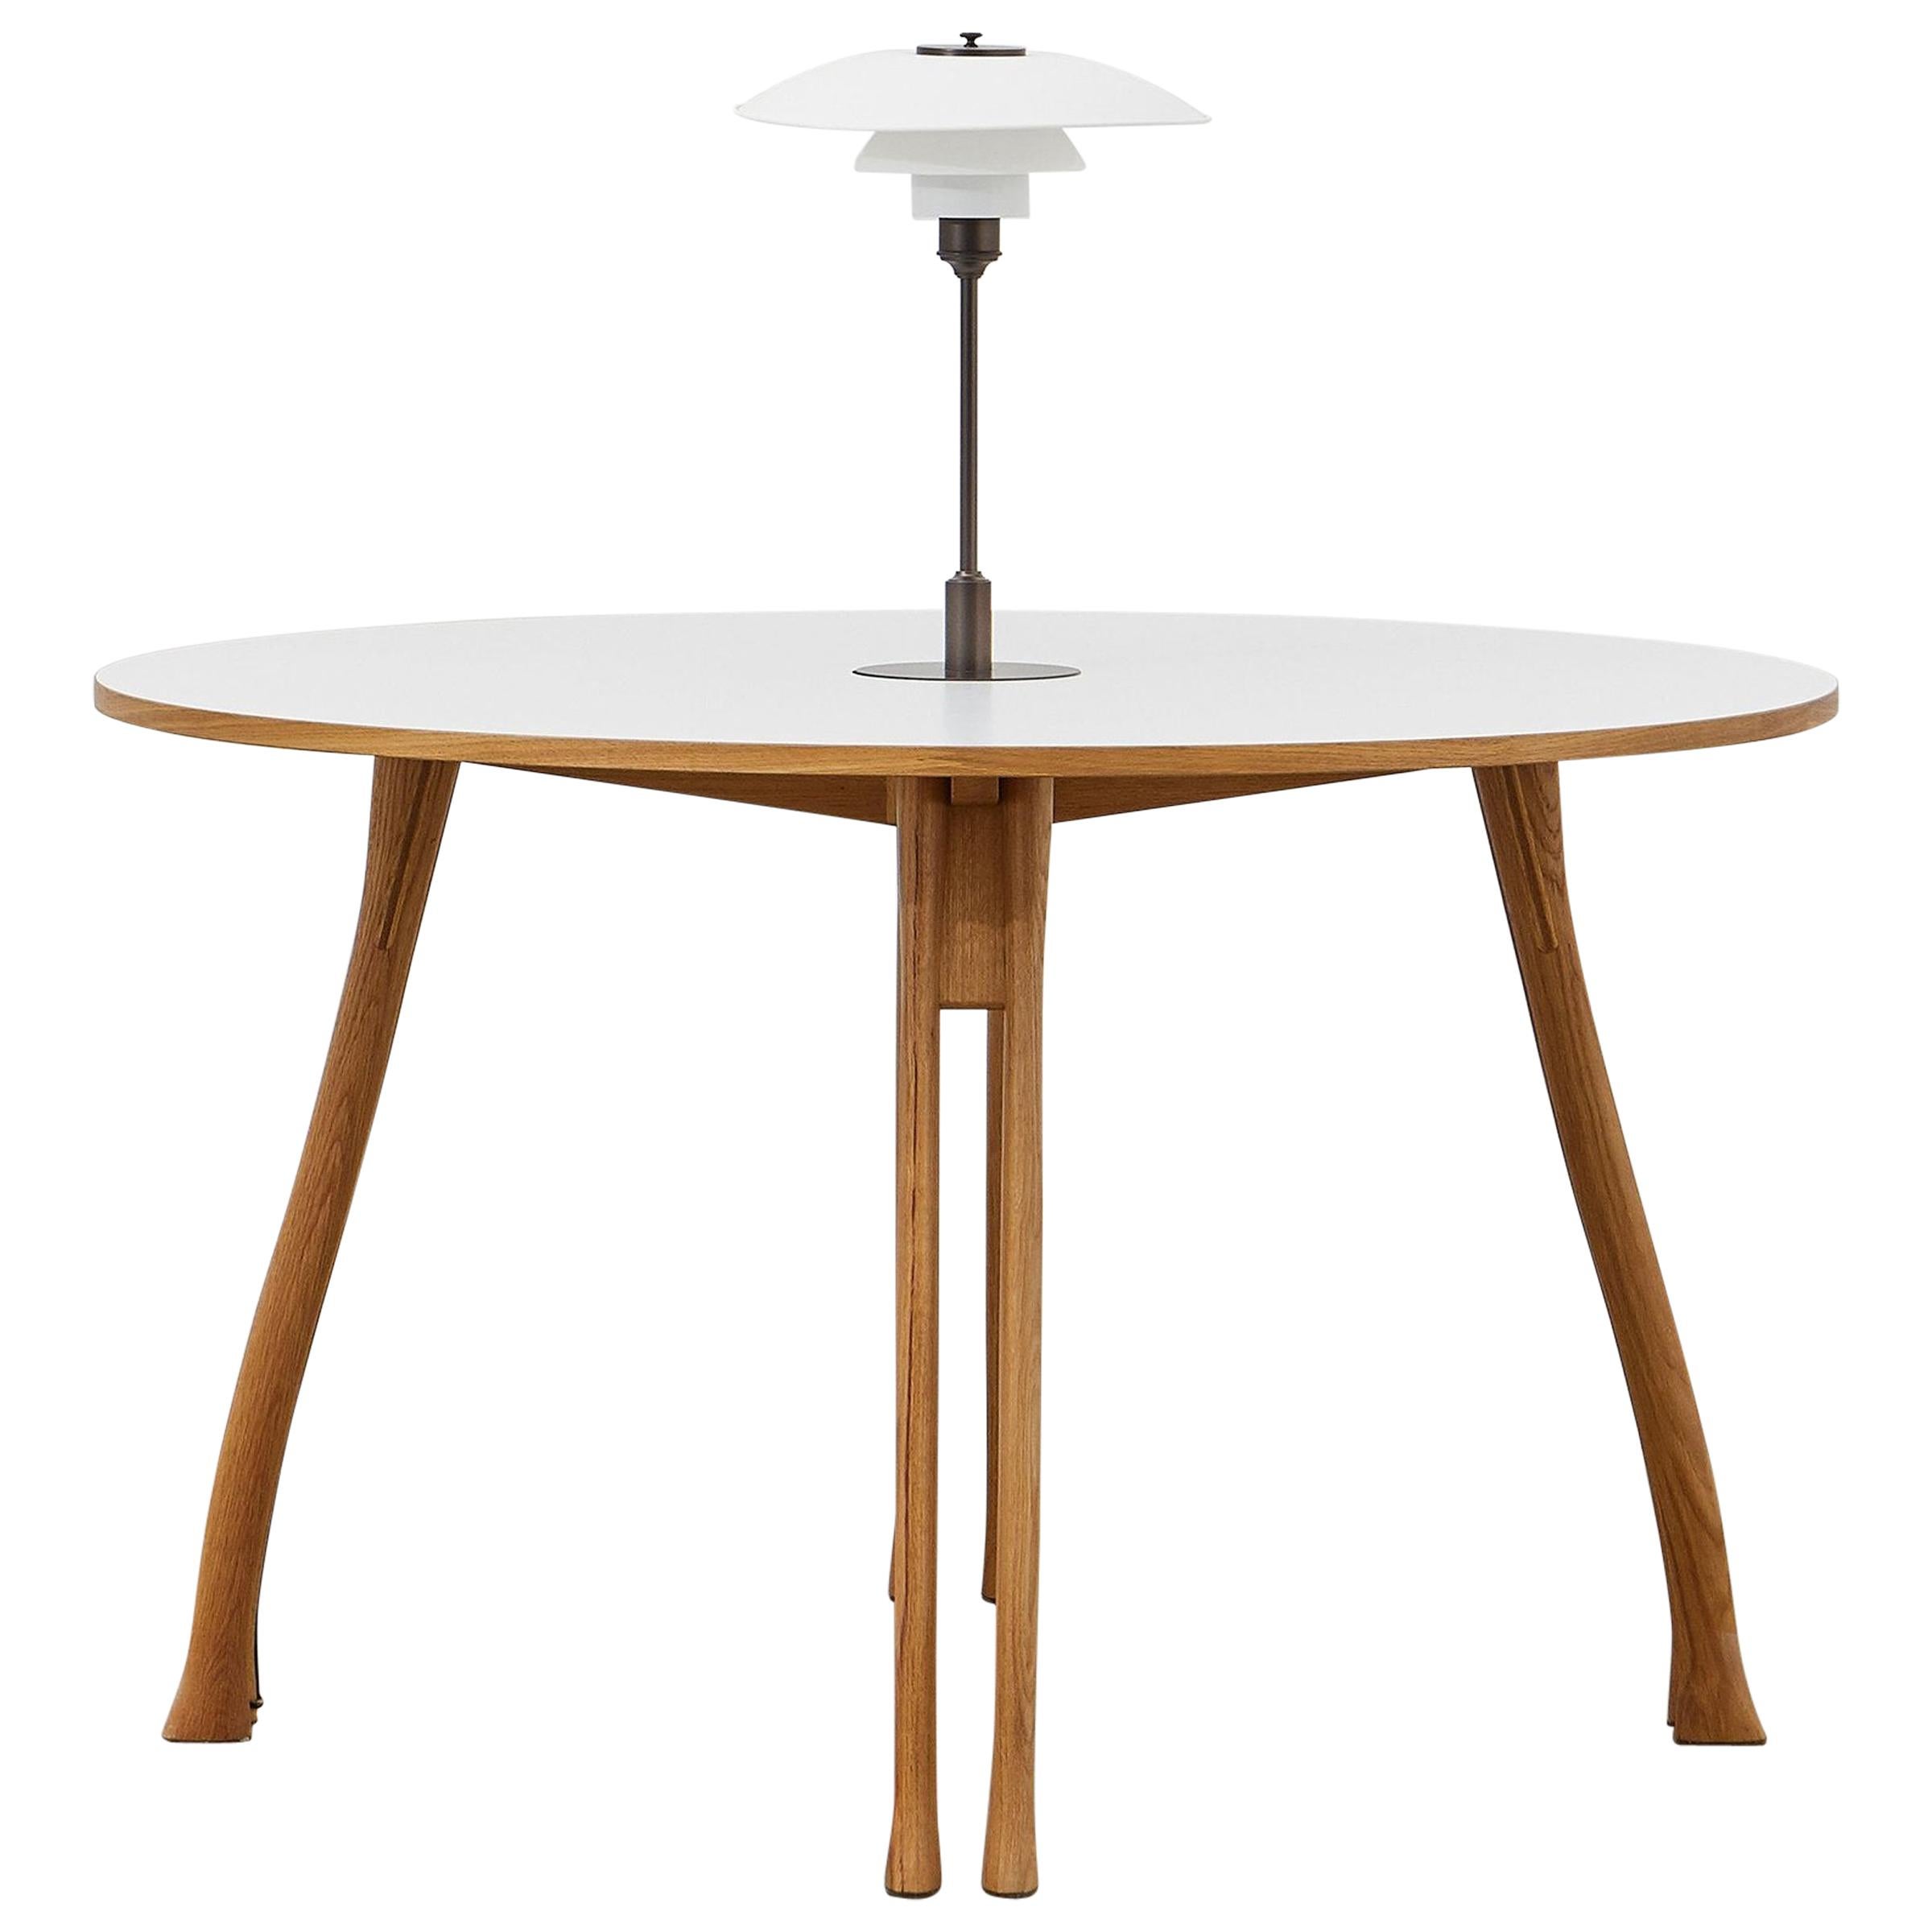 PH Axe Table, natural oak legs, laminated plate, white PH 3 ½ - 2 ½ lamp